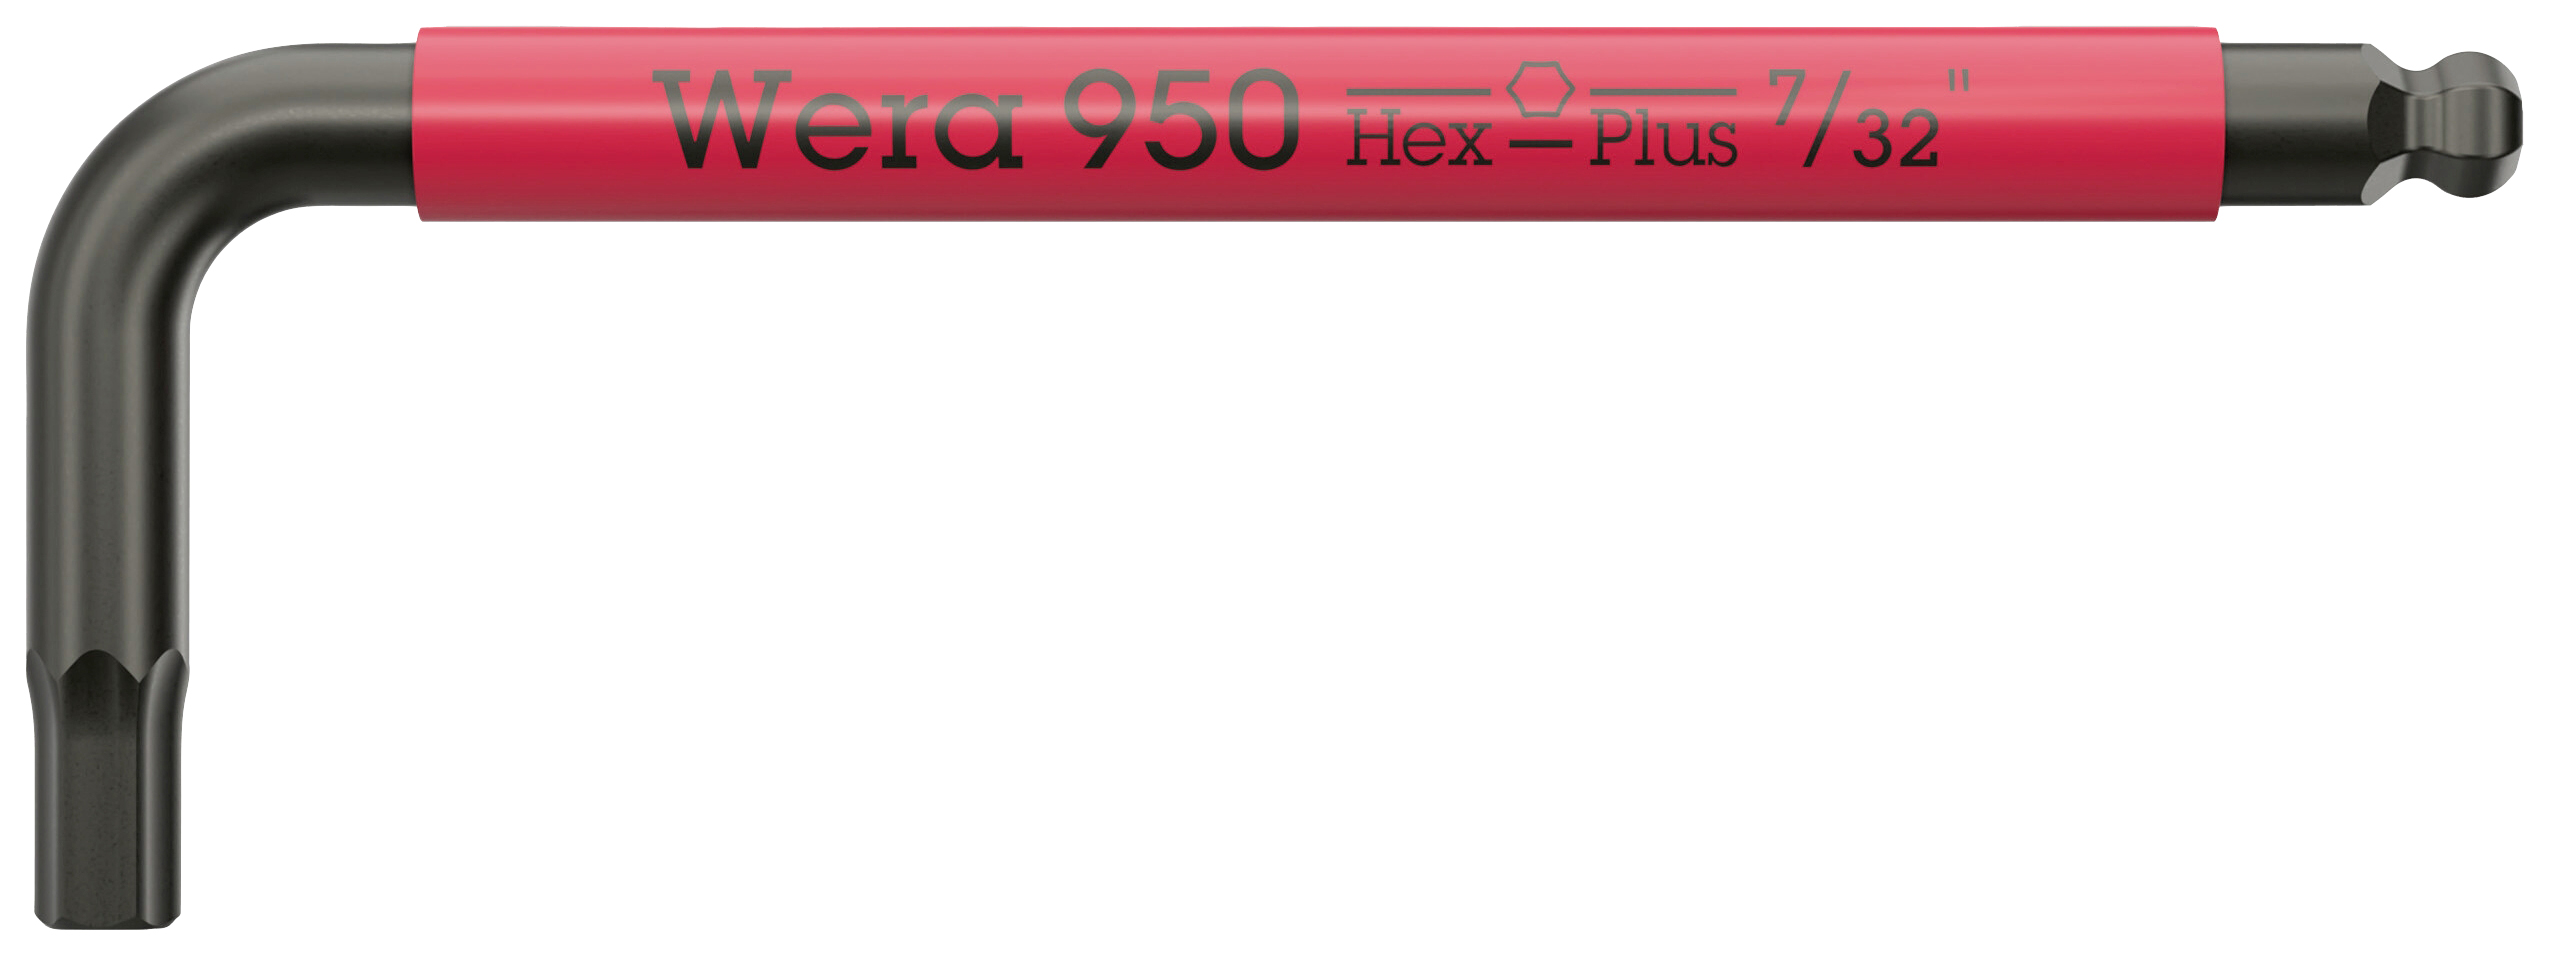   Wera  950 SPKS Multicolour  05022656001    klíč        7/32 palec  